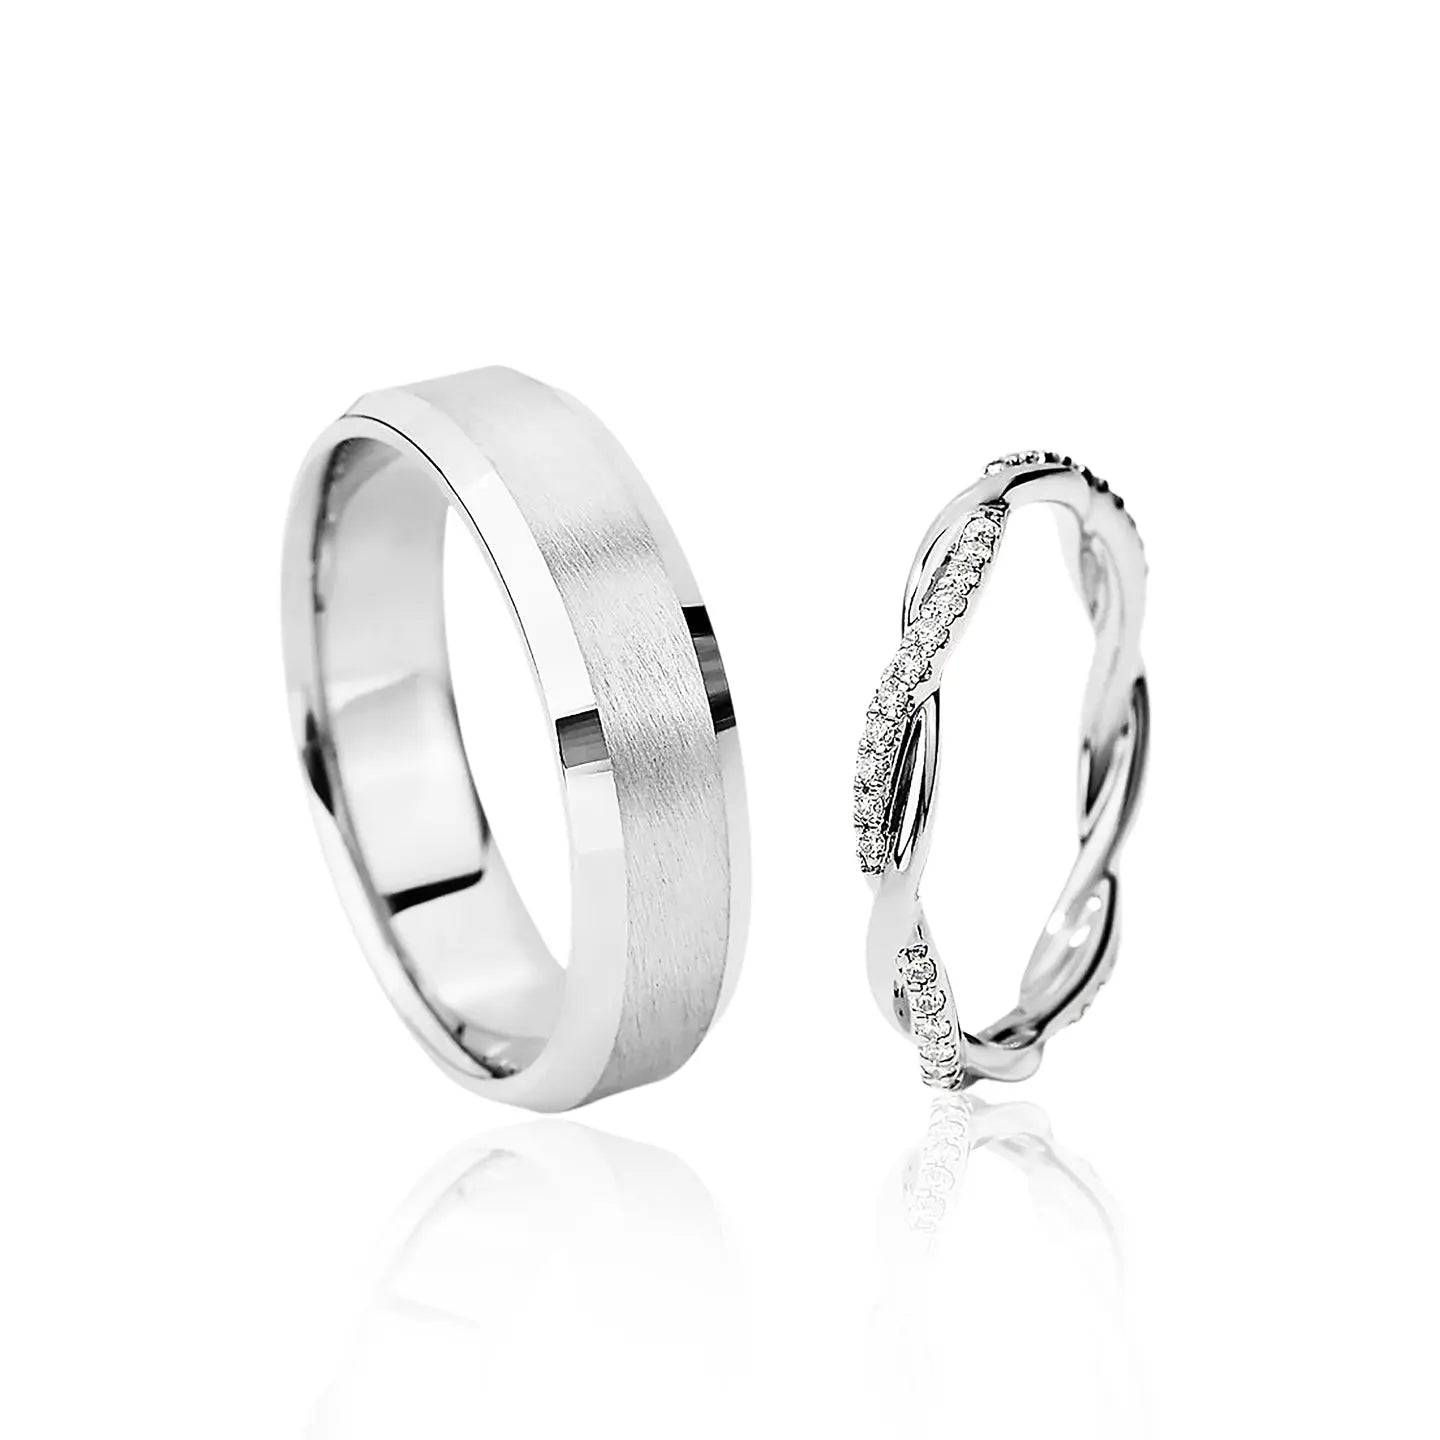 Paul & Joanne Ring Duo - Minimalistic Diamond Rings in Silver - Baza Boutique 